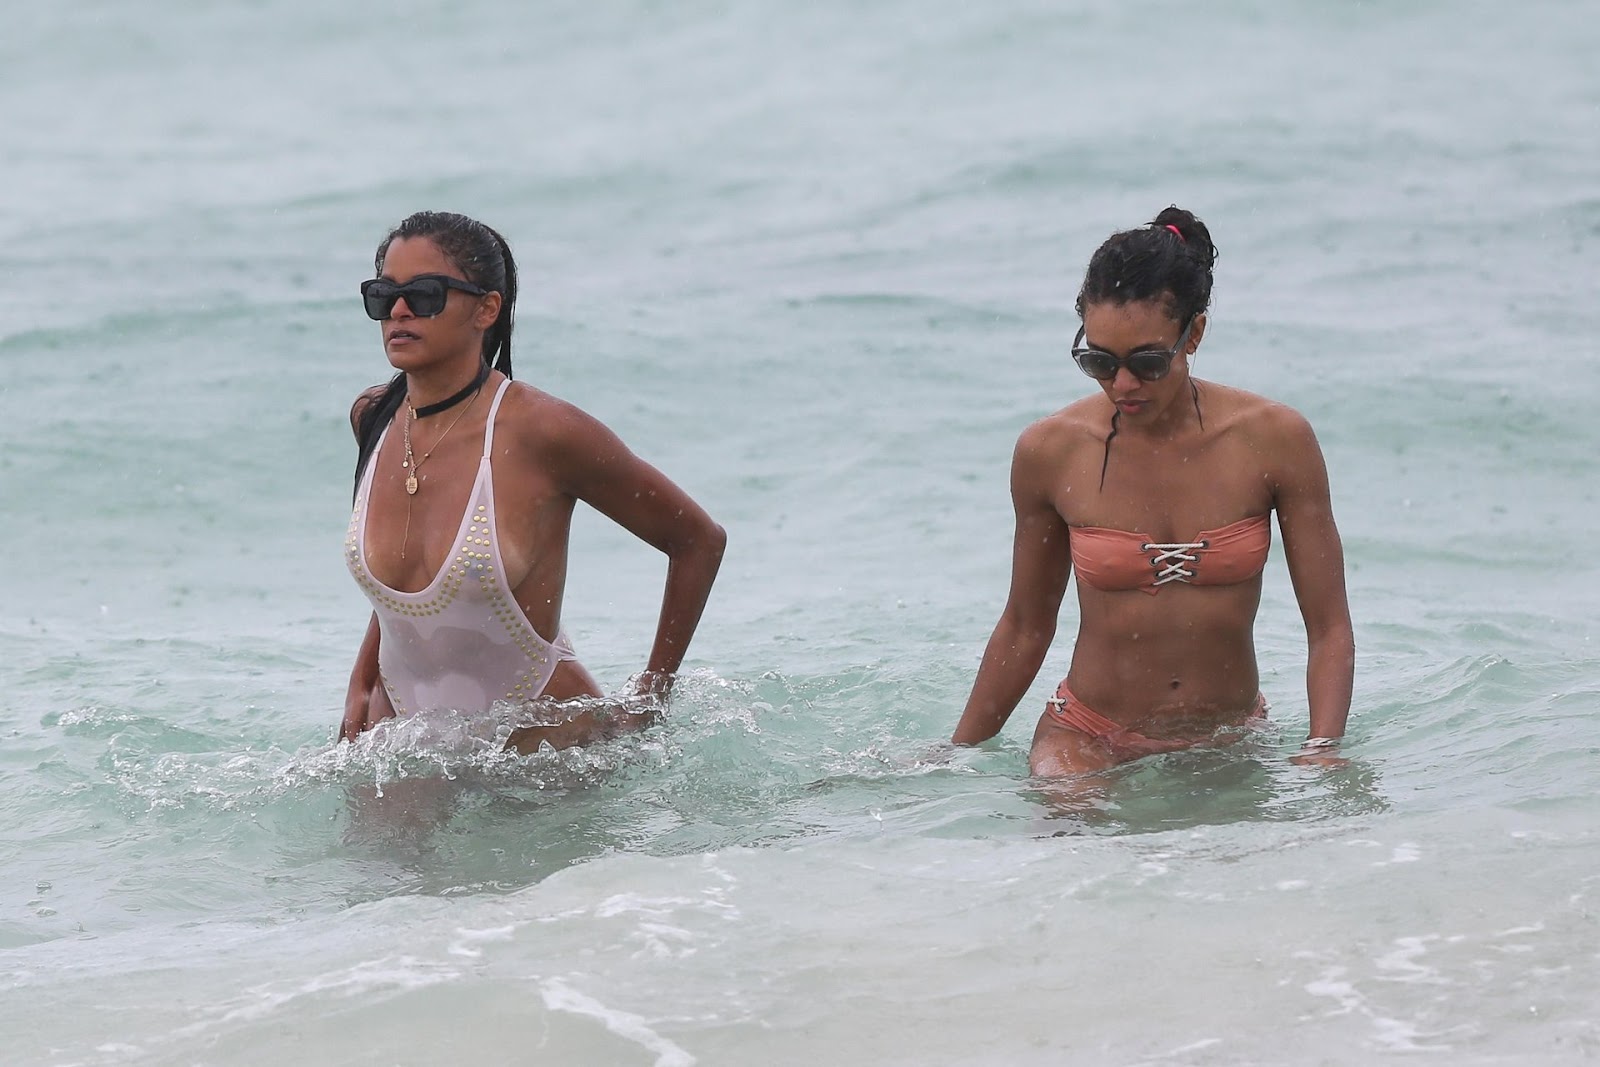 Claudia Jordan swimsuit malfunction, while swimming in the ocean of Miami Beach